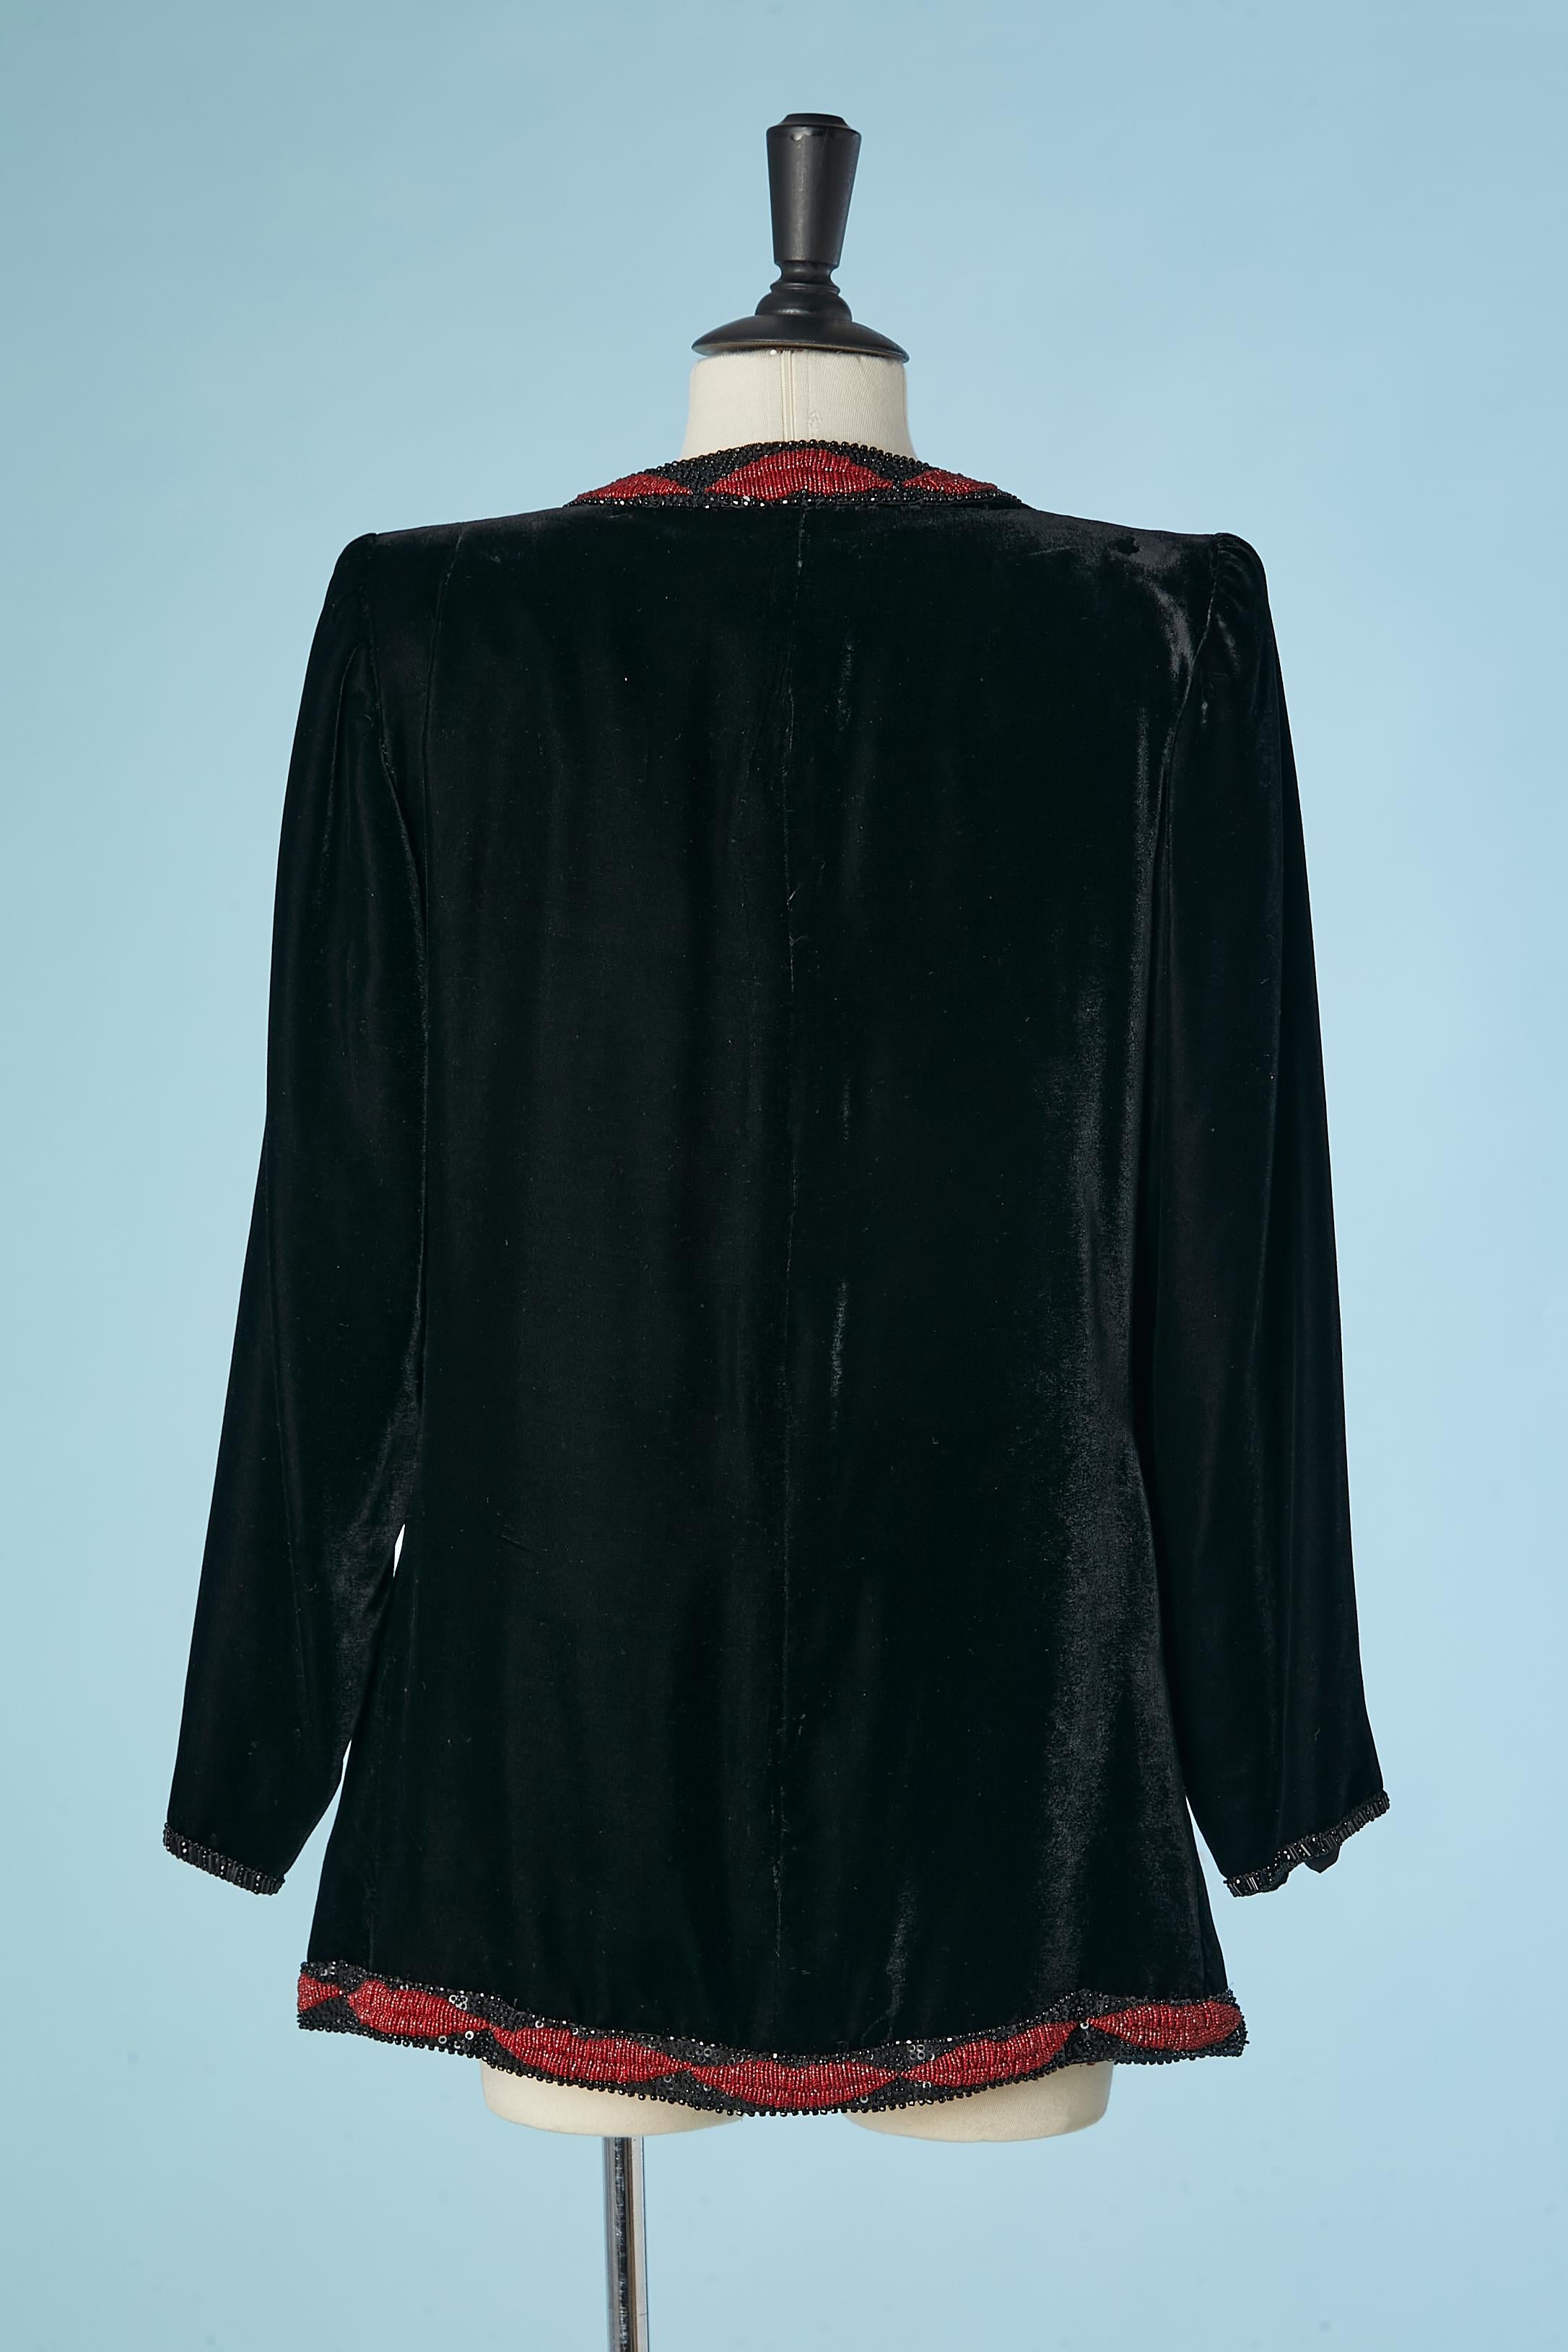 Black silk velvet evening jacket with 